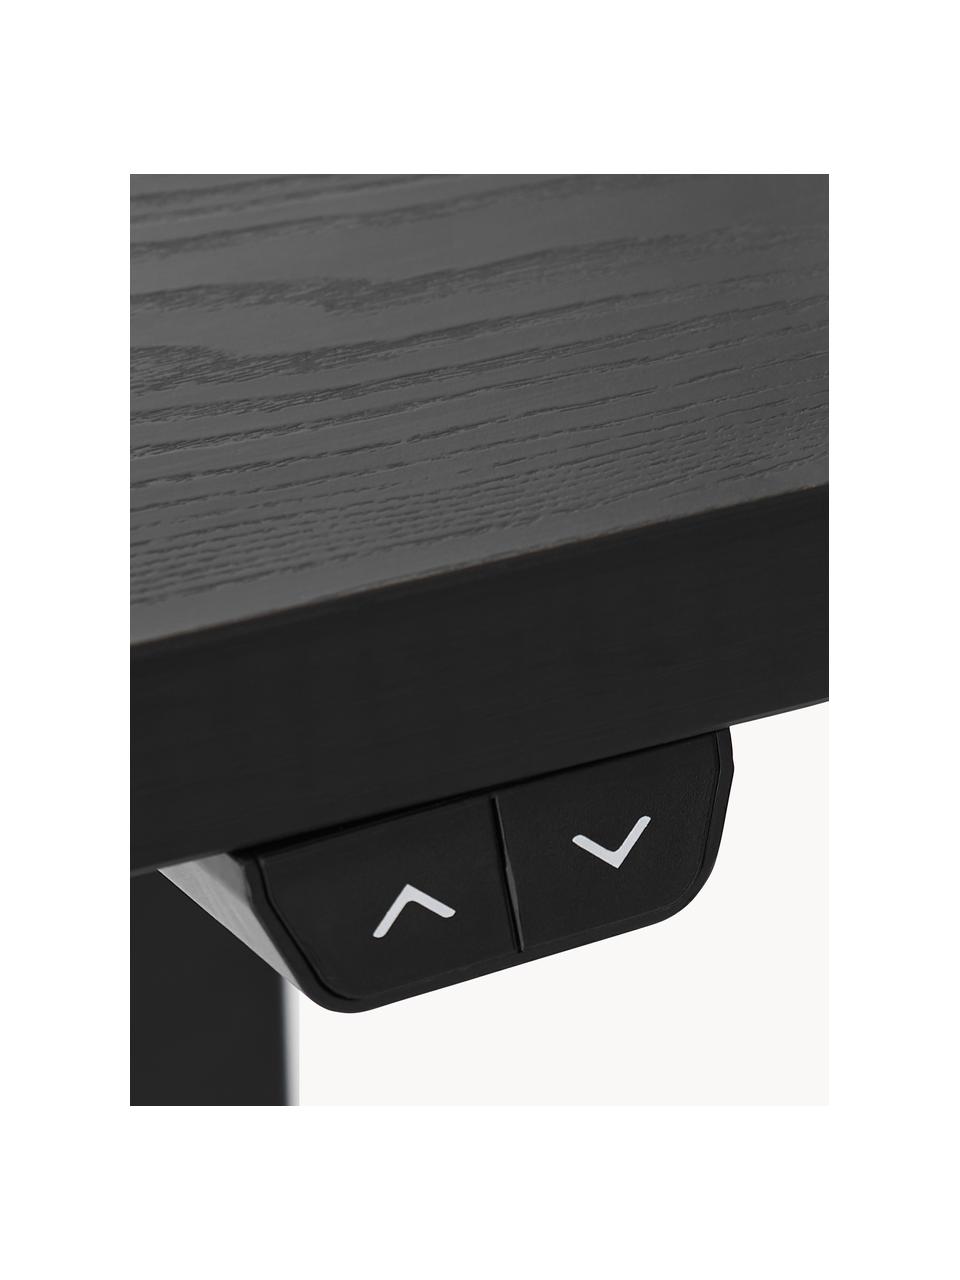 Höhenverstellbarer Schreibtisch Lea, Tischplatte: Sperrholz, Melamin beschi, Gestell: Metall, beschichtet, Schwarz, B 120 x T 60 cm